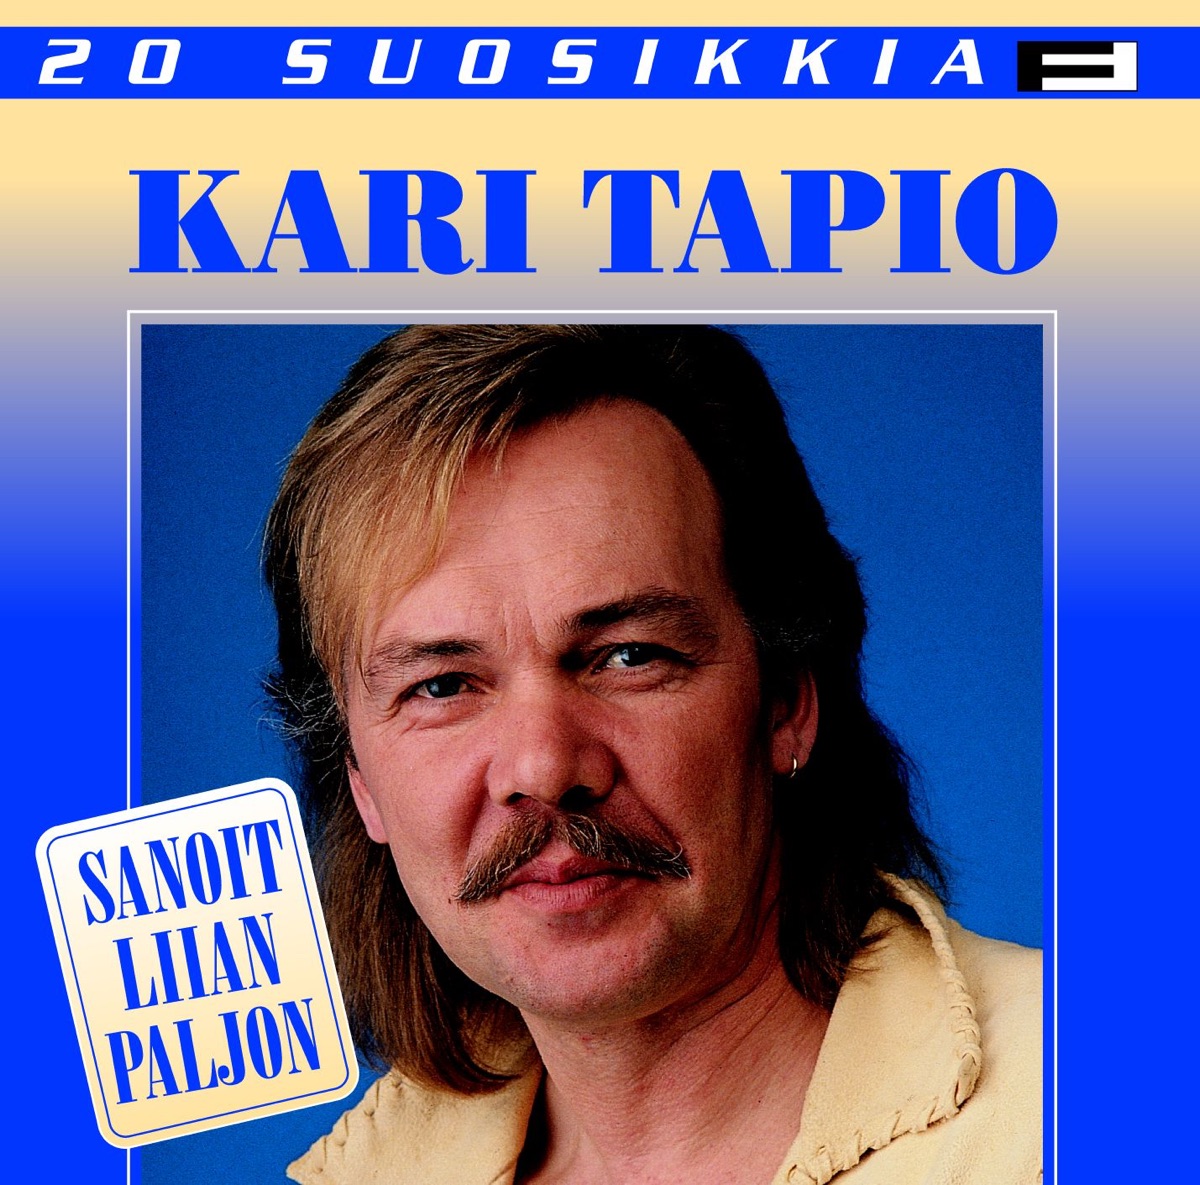 Kari Tapio de Kari Tapio no Apple Music